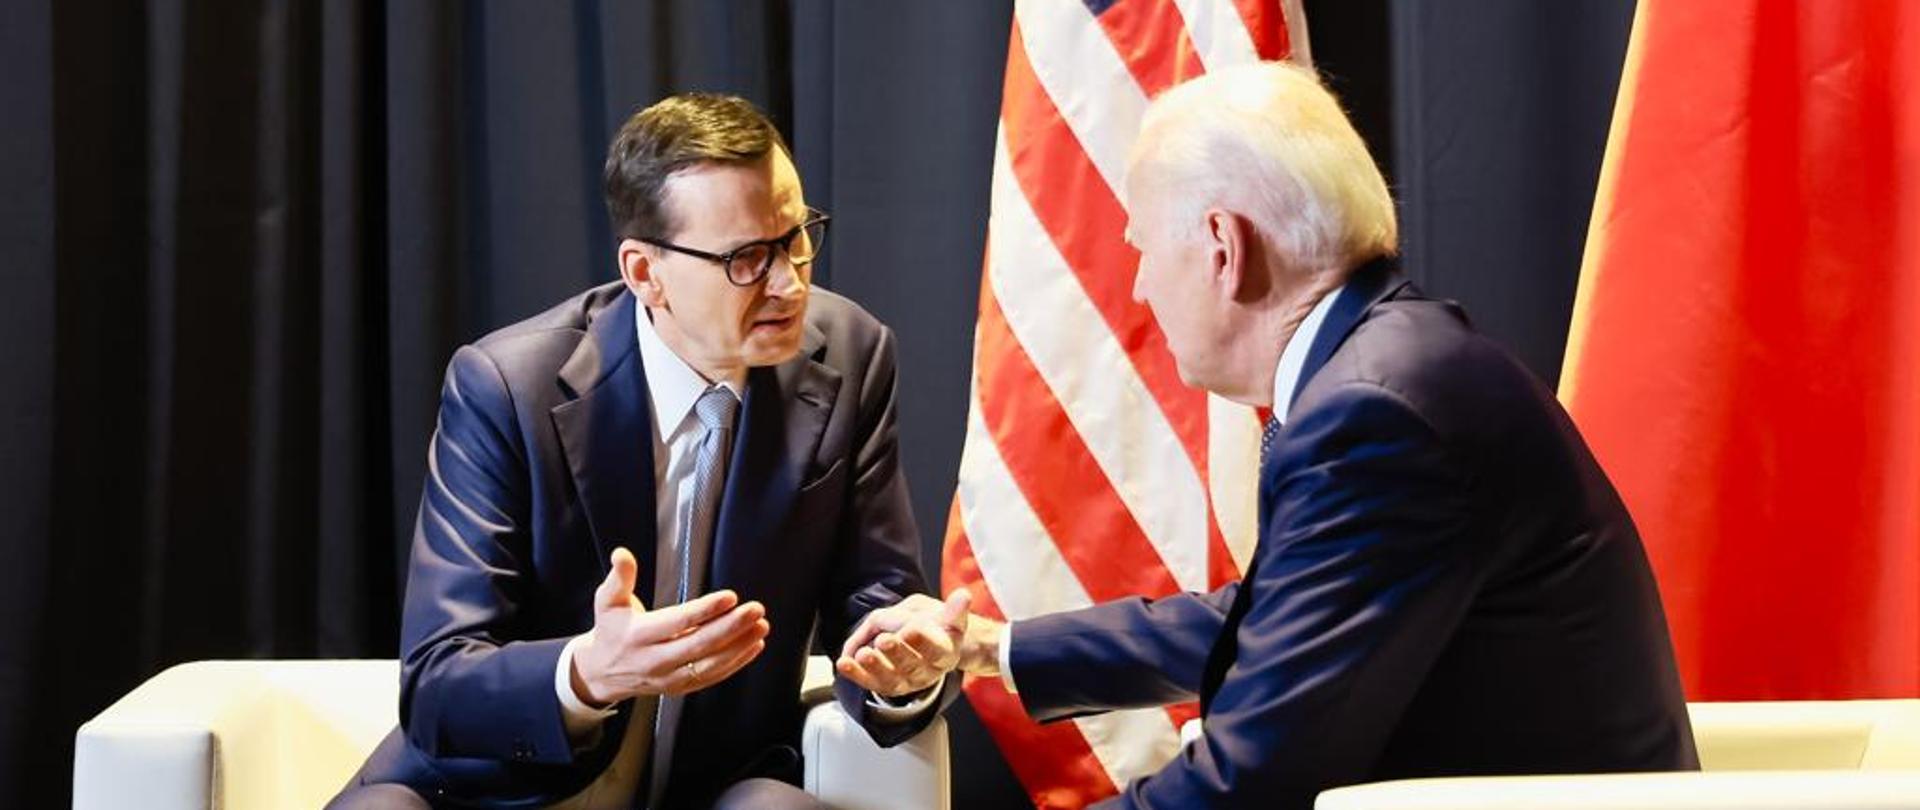 Prezydent Joe Biden i Premier Mateusz Morawiecki podczas spotkania.